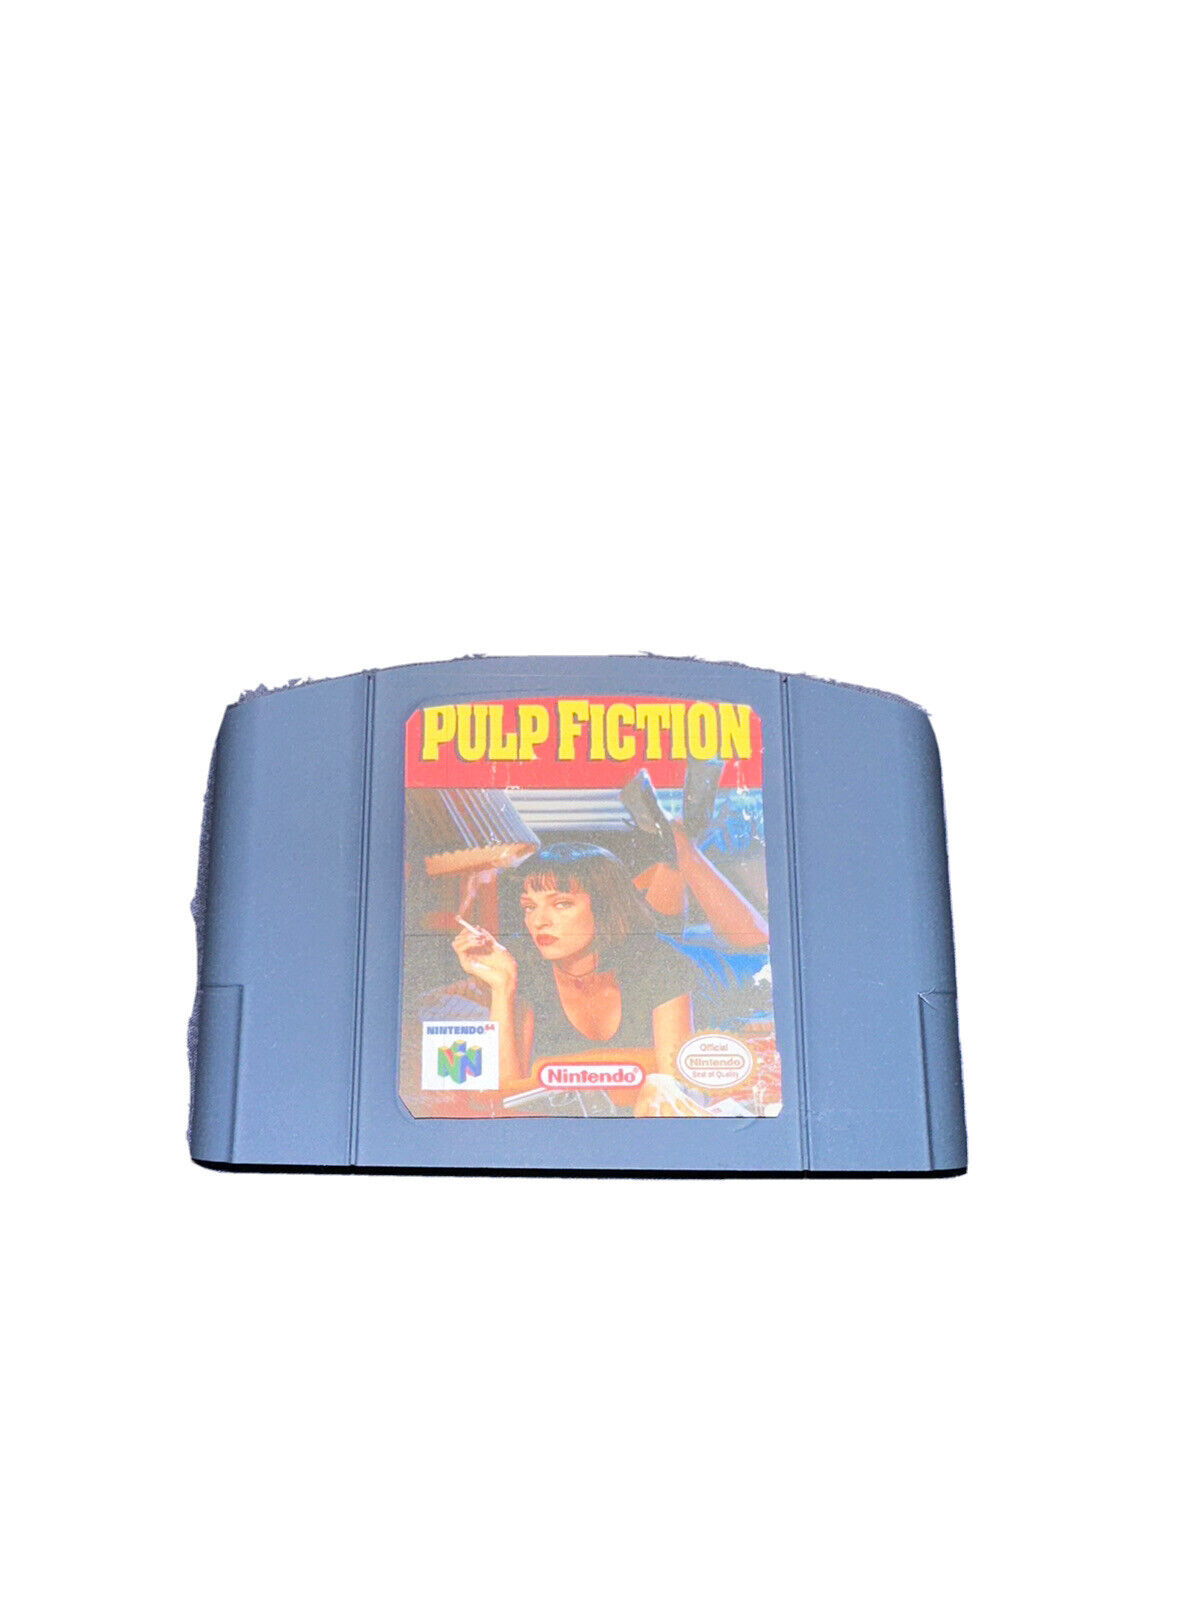 Pulp Fiction N64 Cartridge